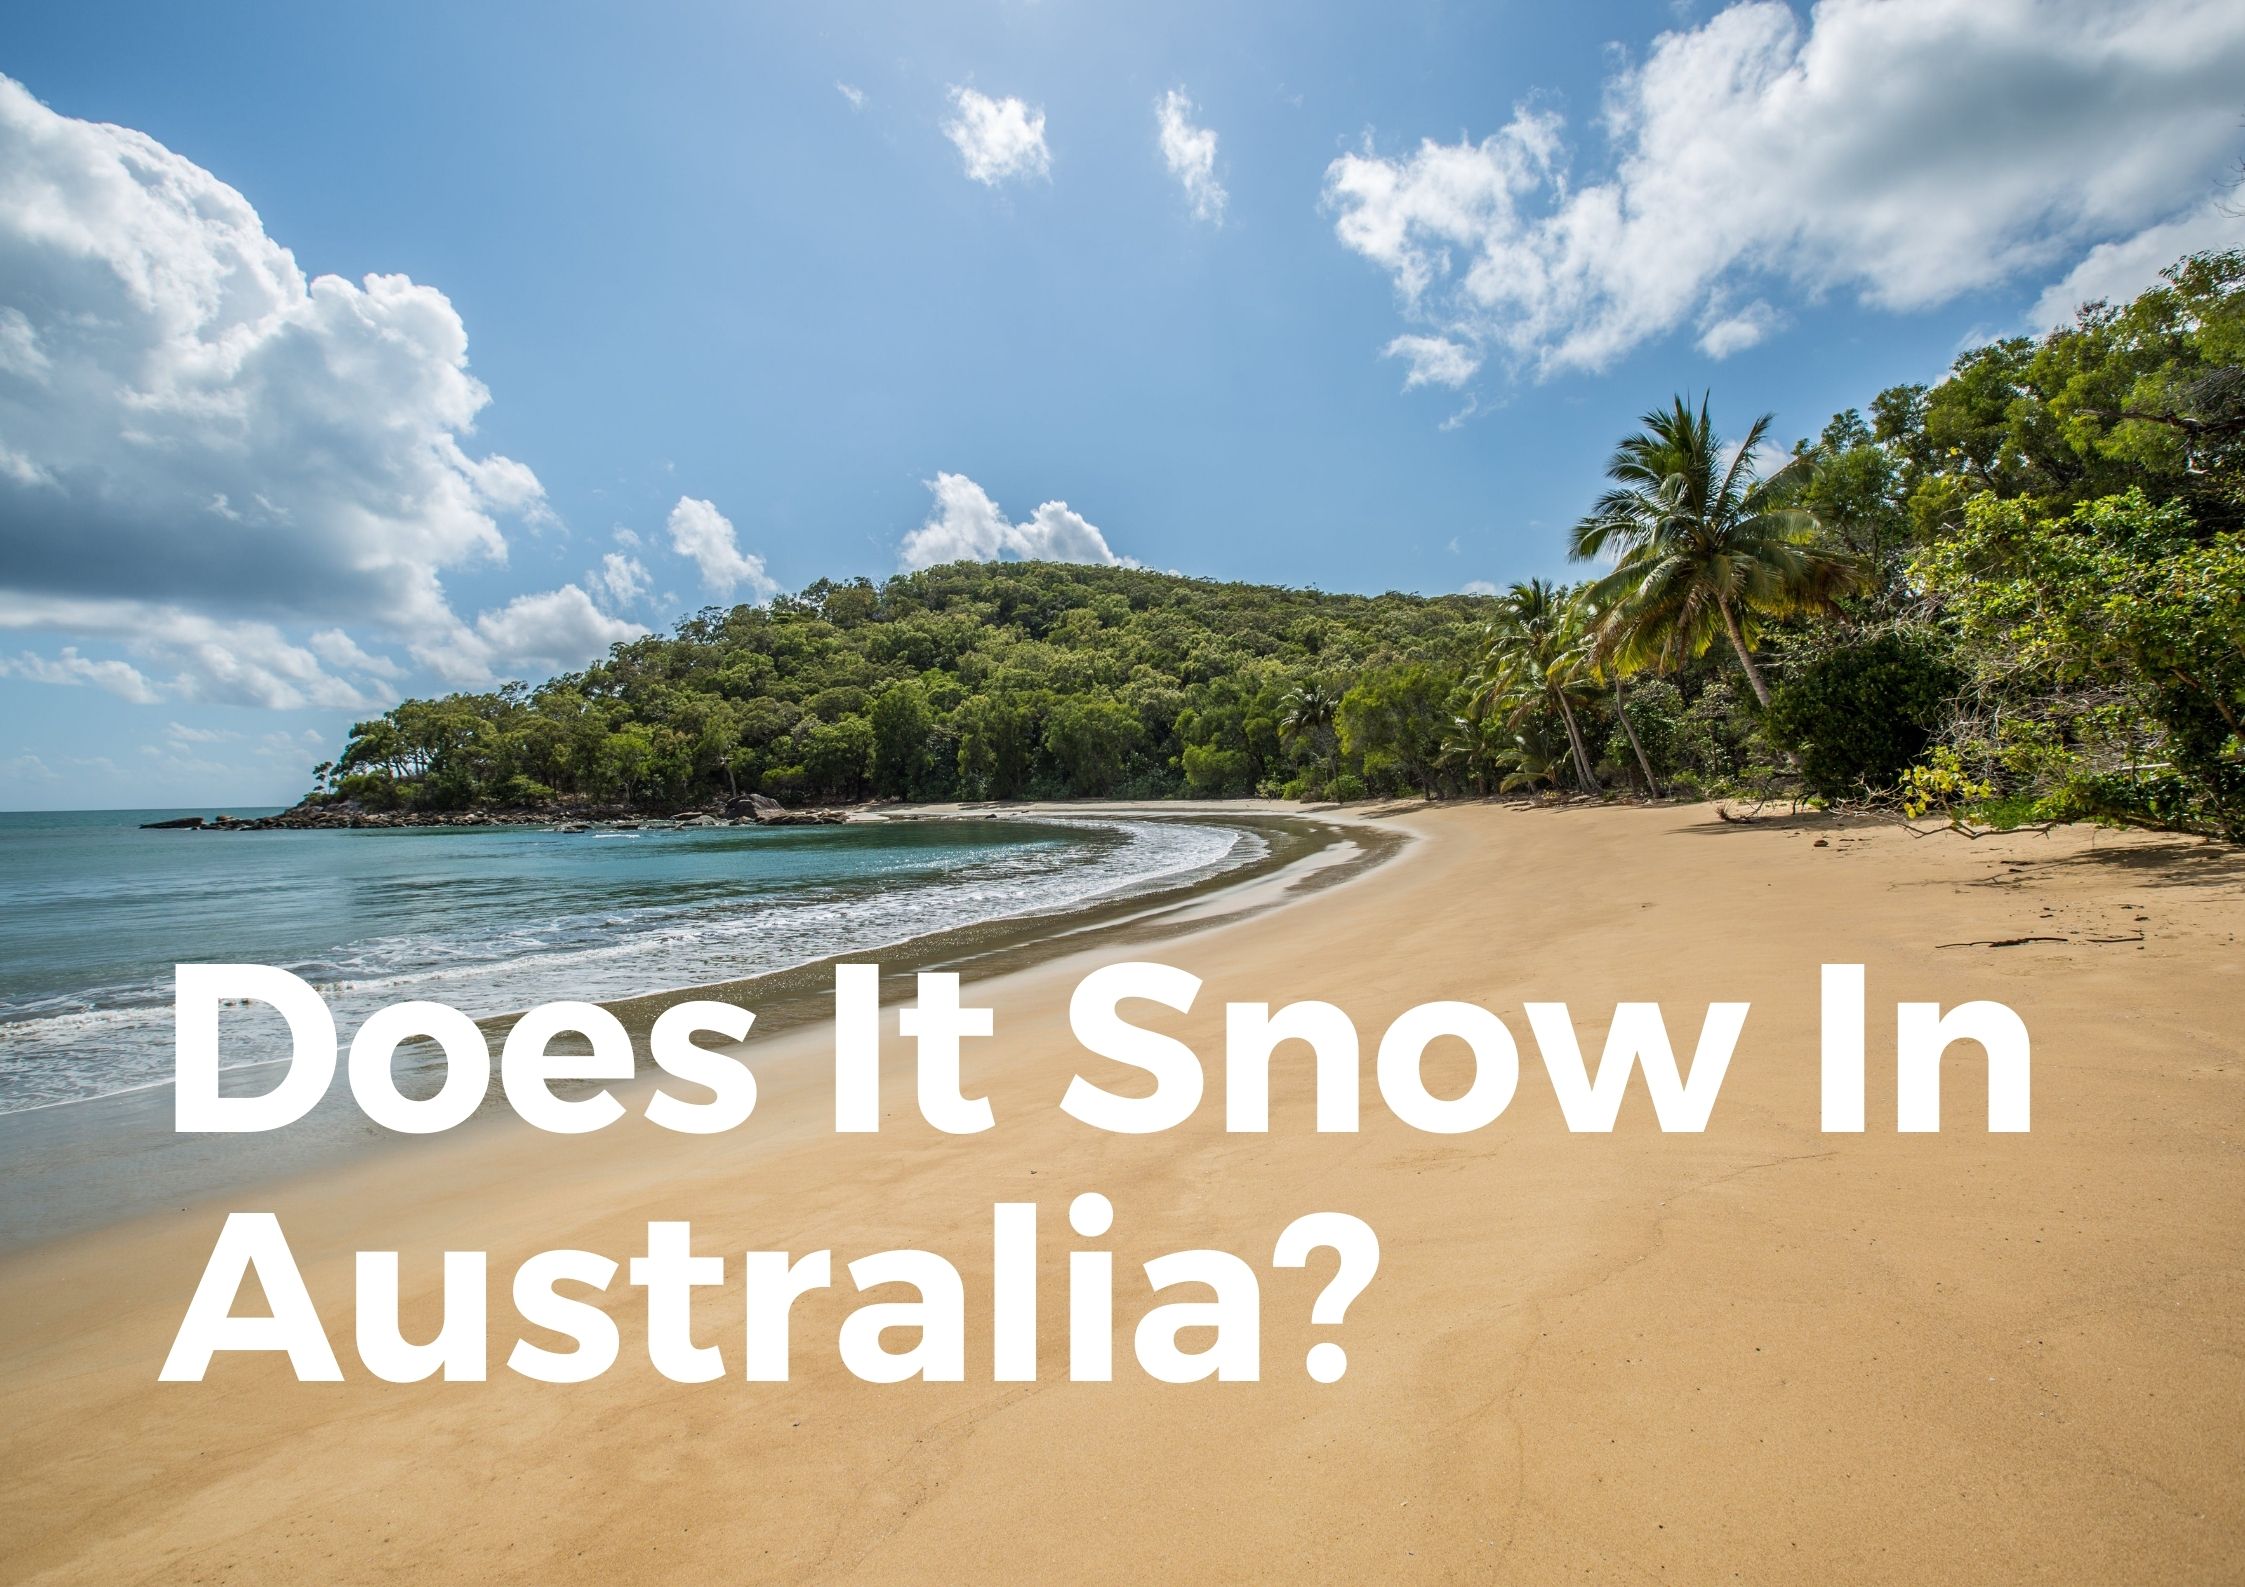 Does it snow in Australia?